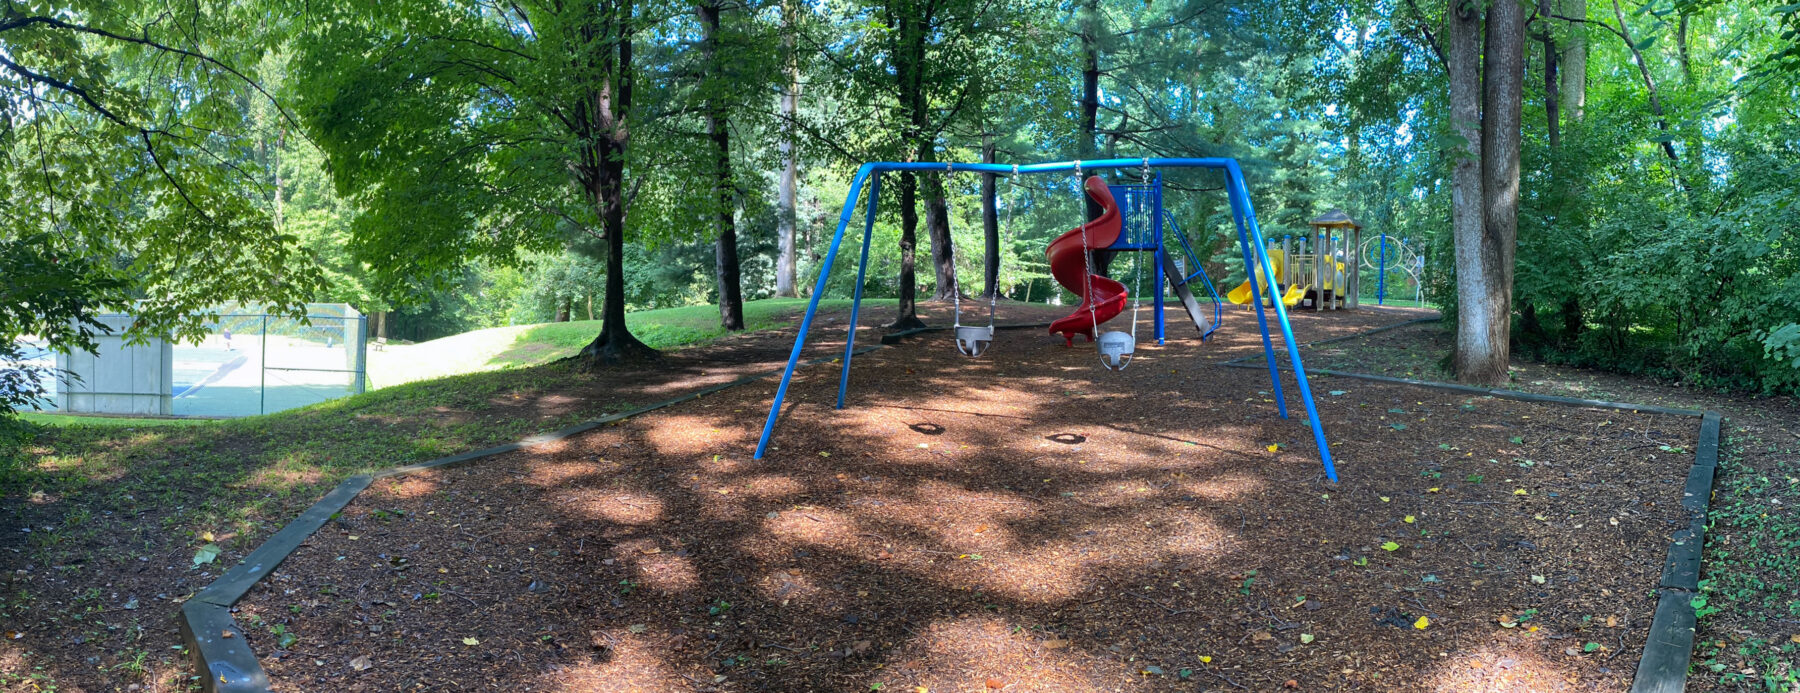 Merrimac Neighborhood Park swing set and playground 